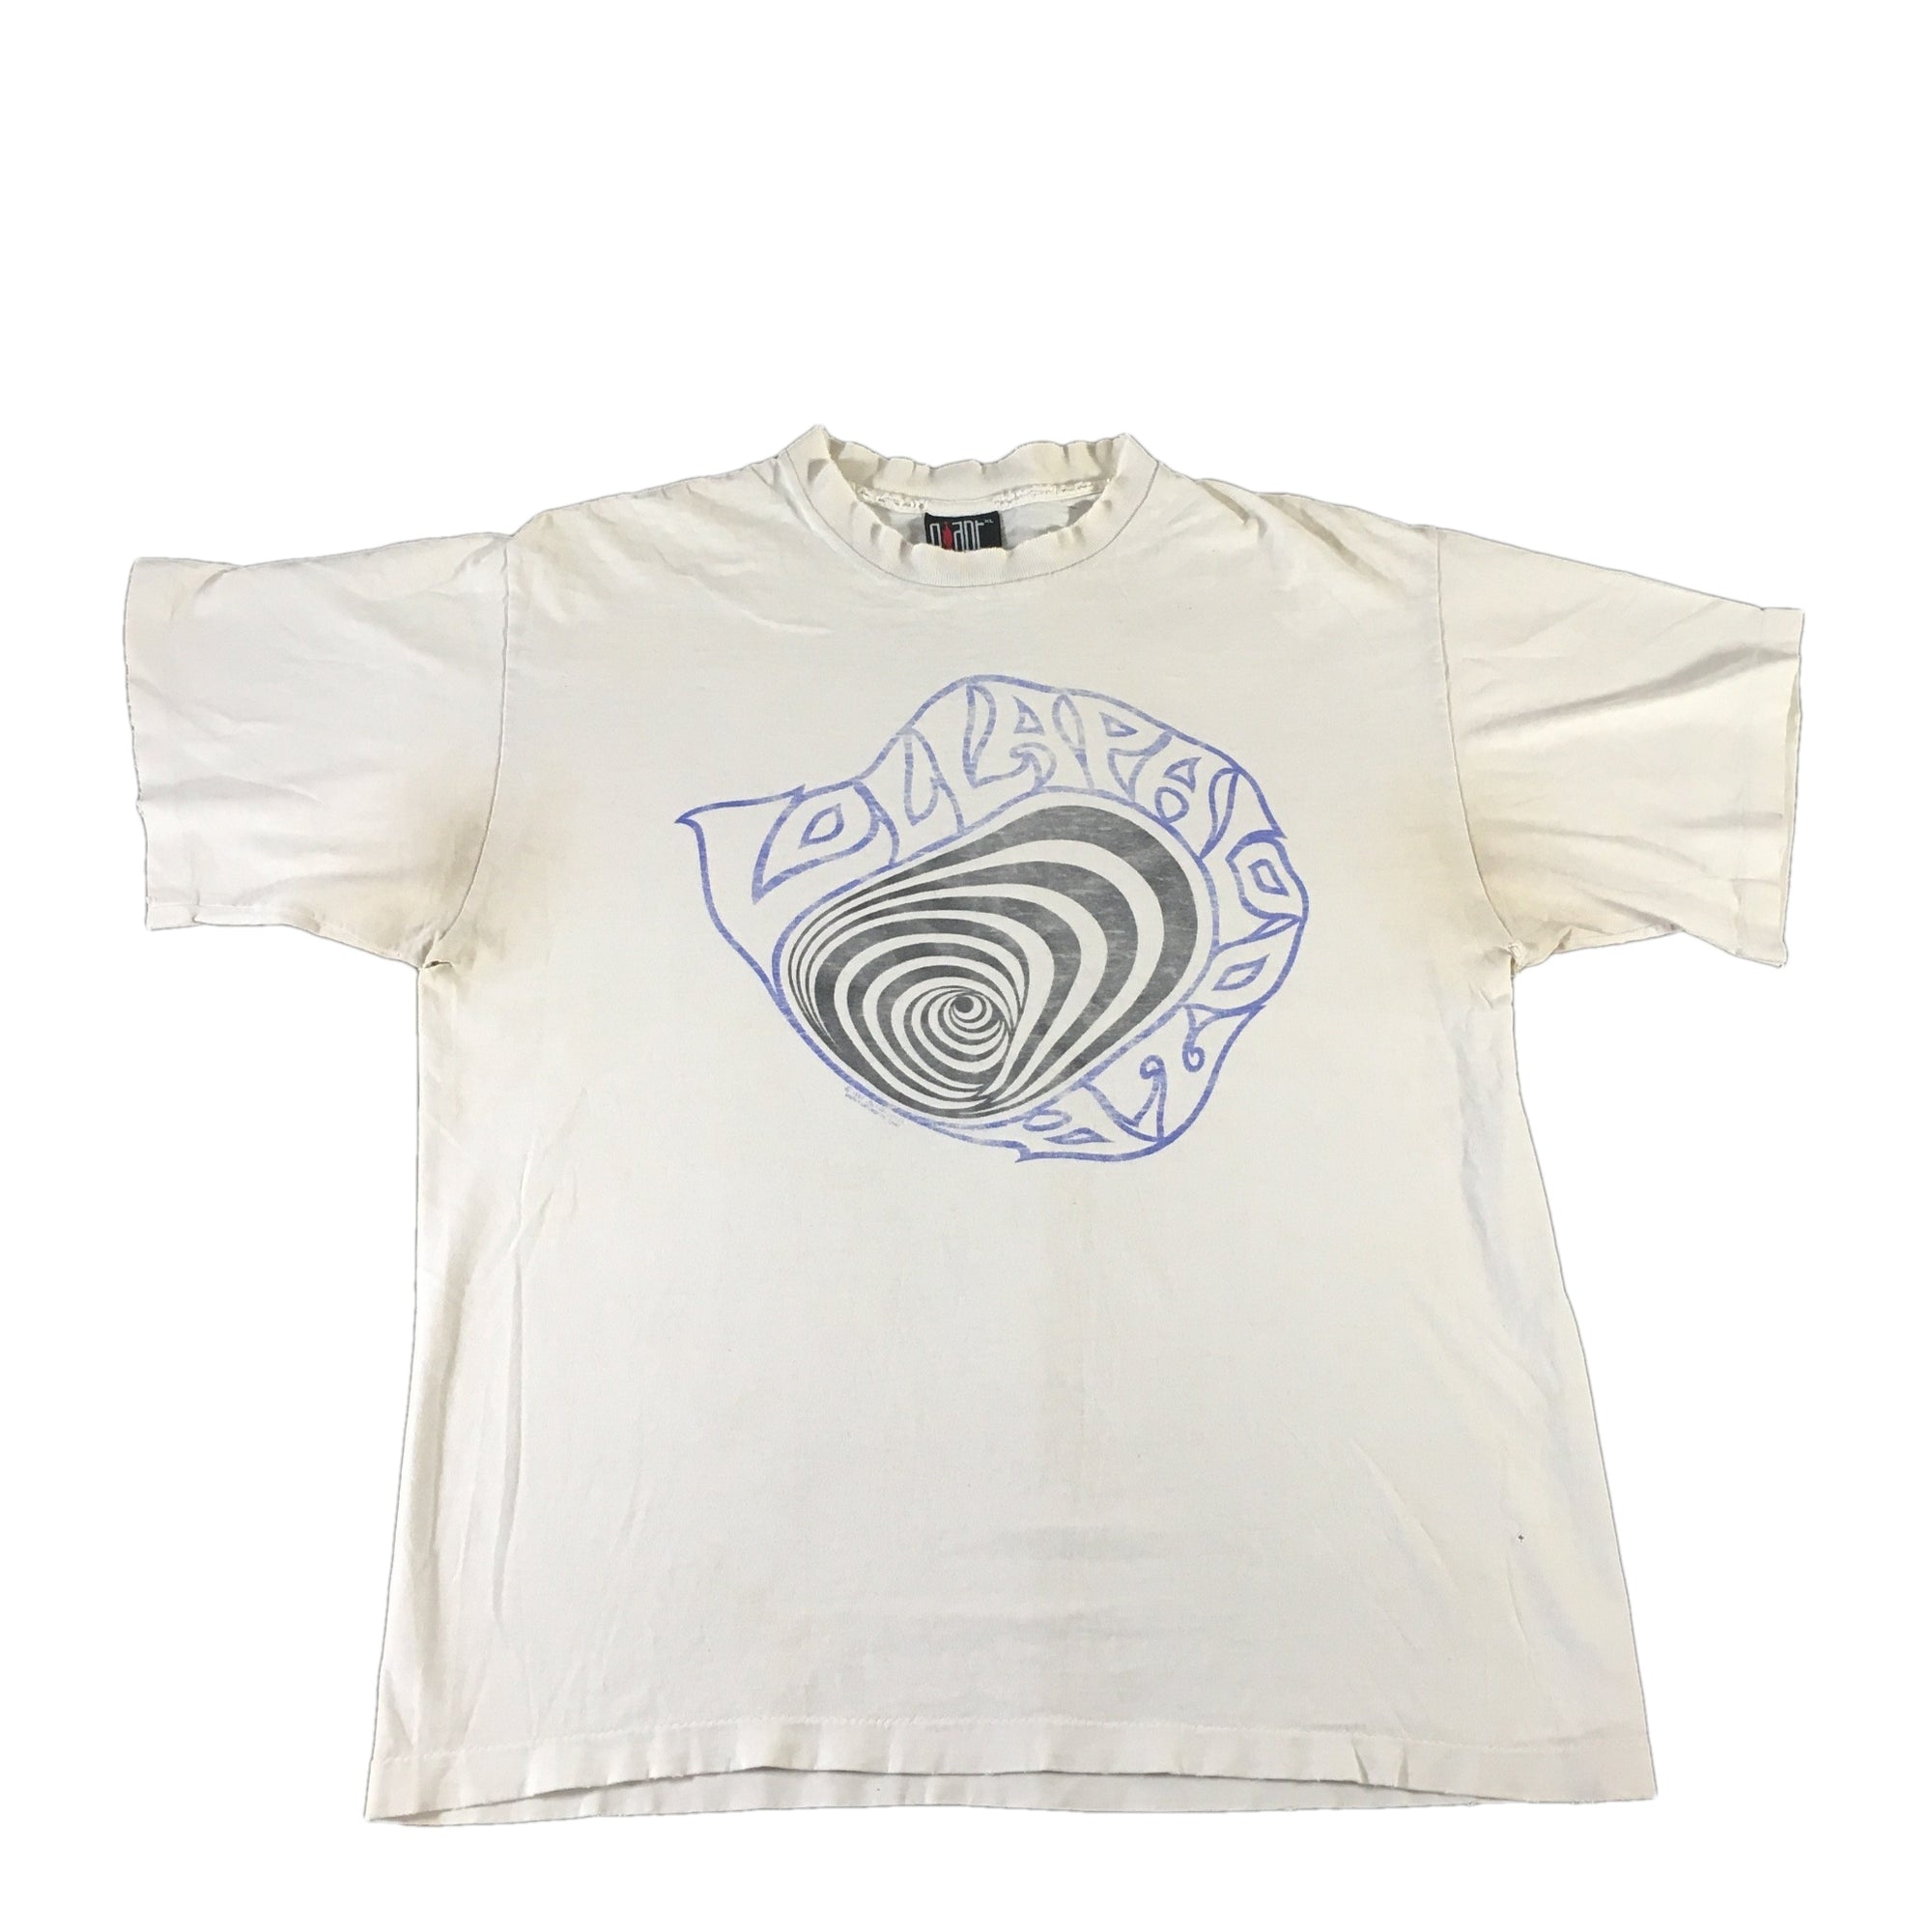 Vintage Lollapalooza "92" T-Shirt - jointcustodydc